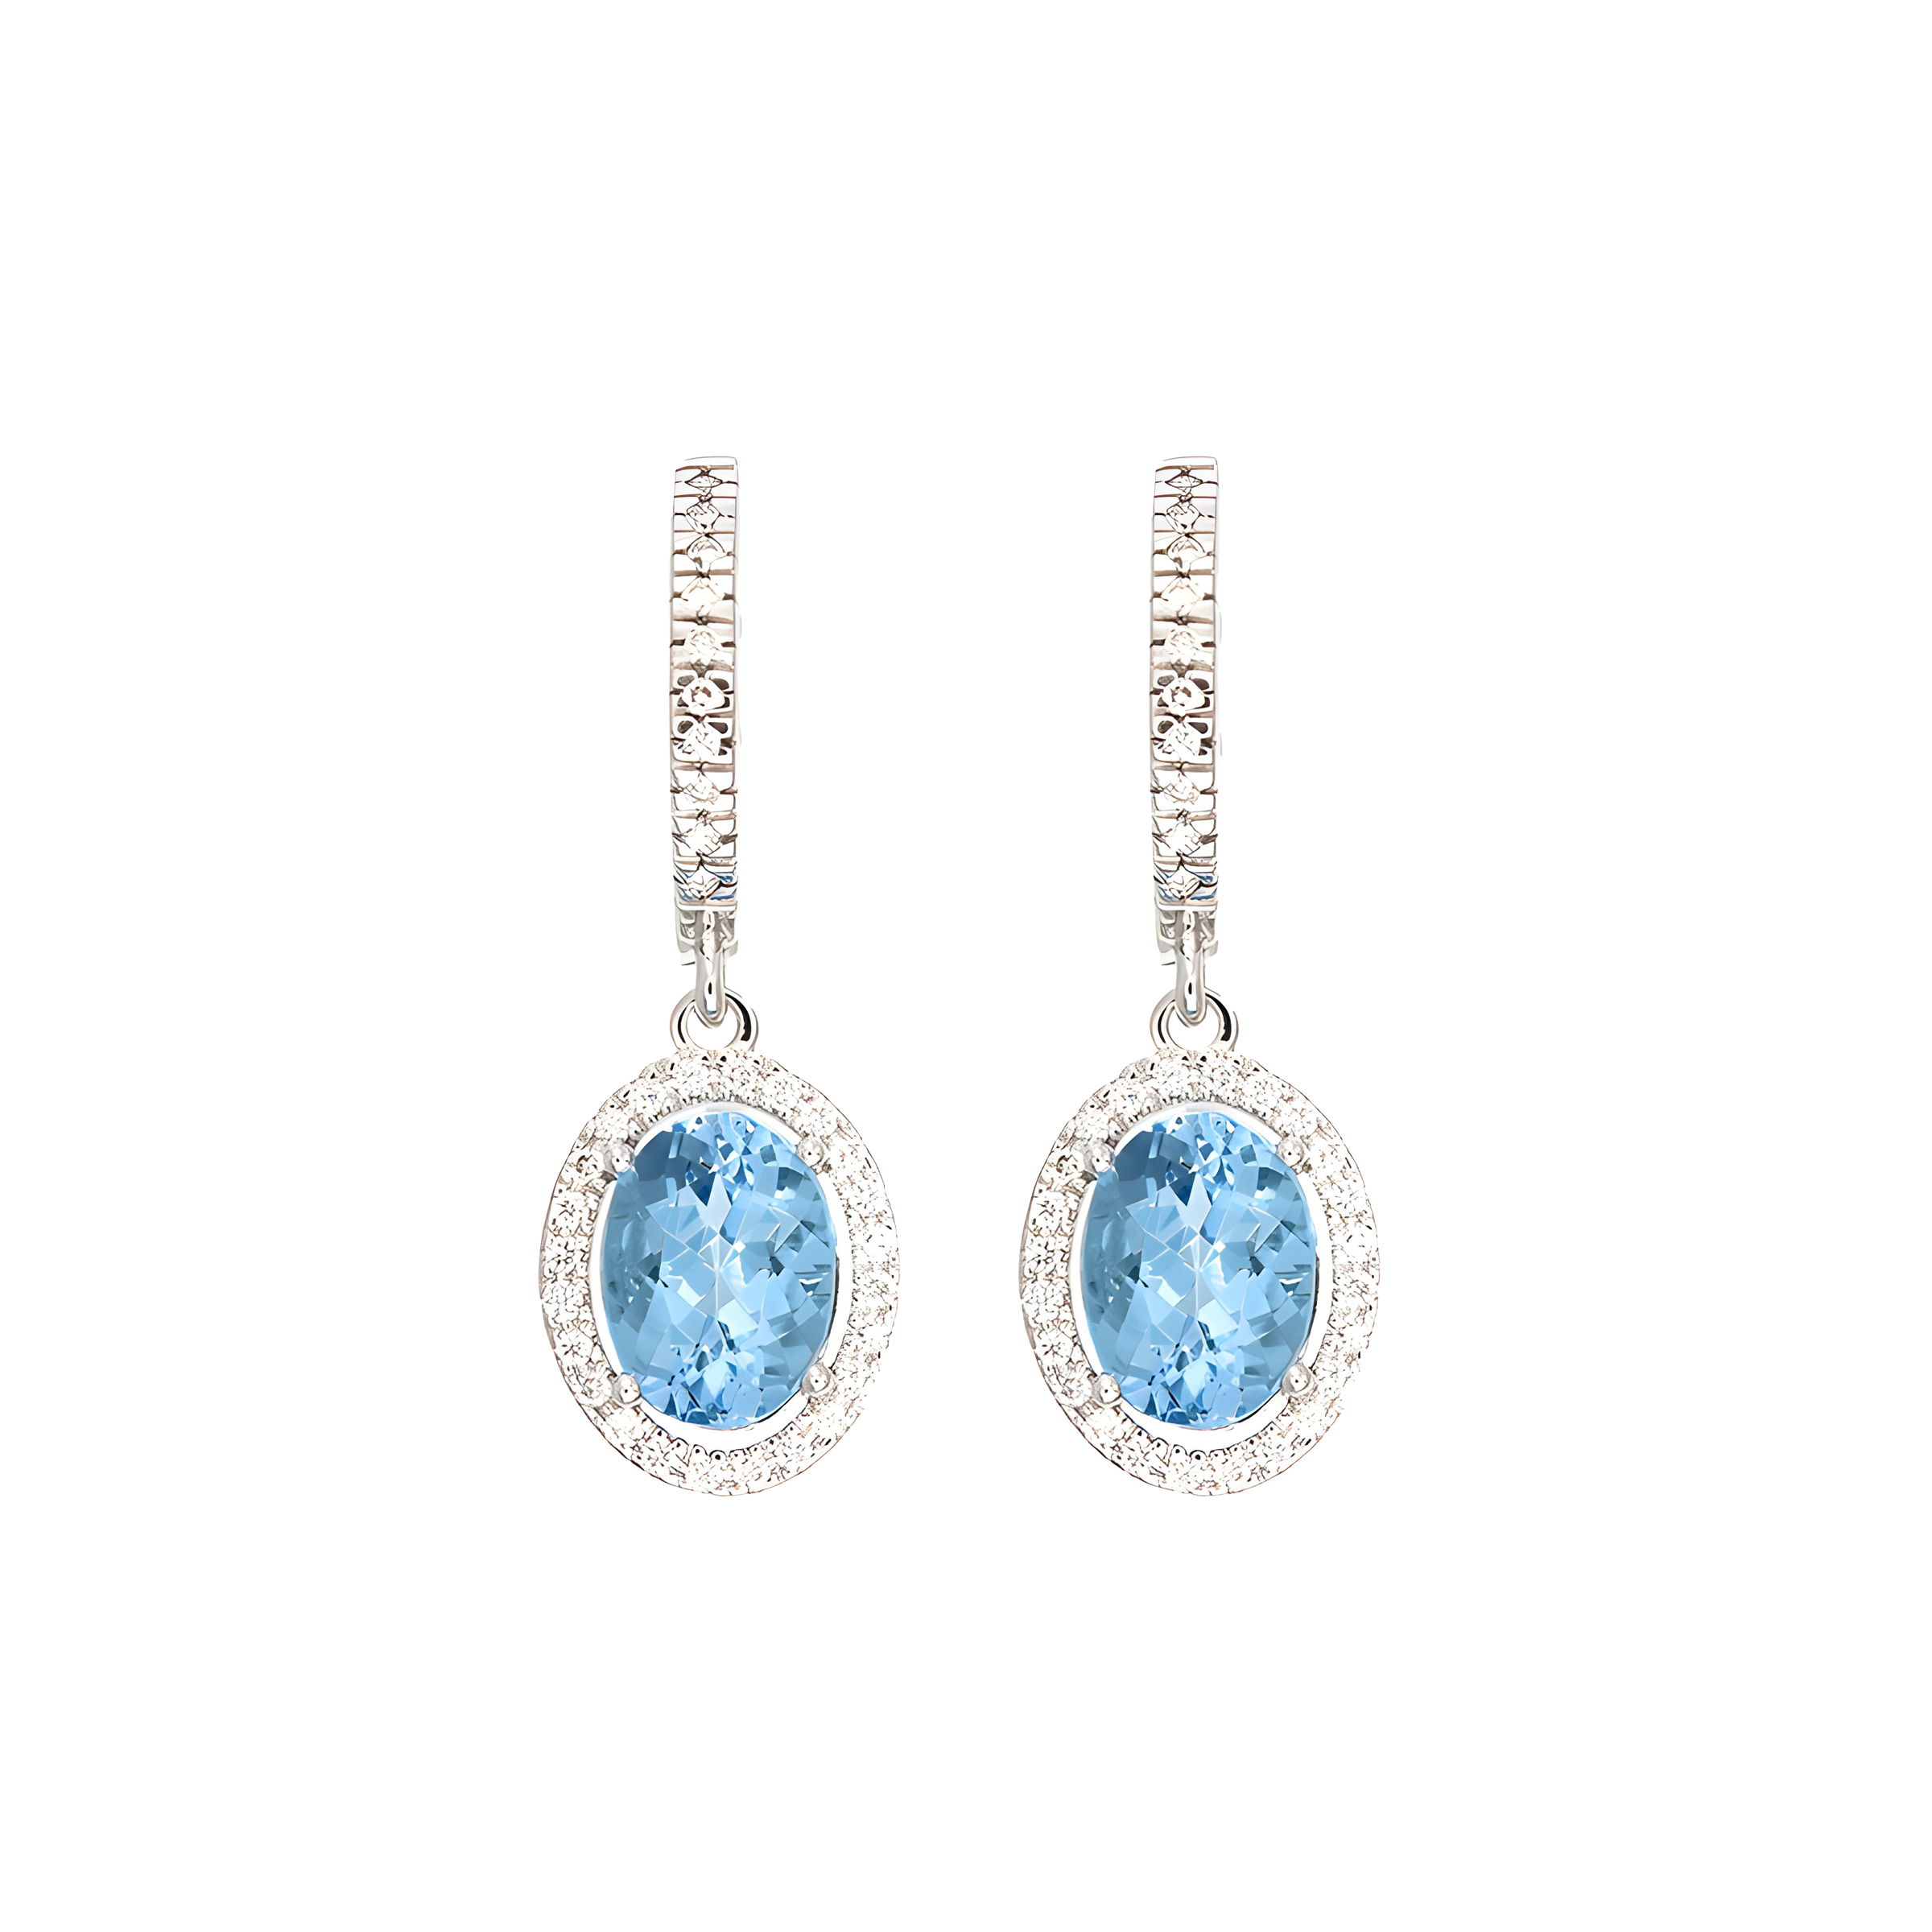 Oval Aquamarine and Diamond Earrings in 18k White Gold